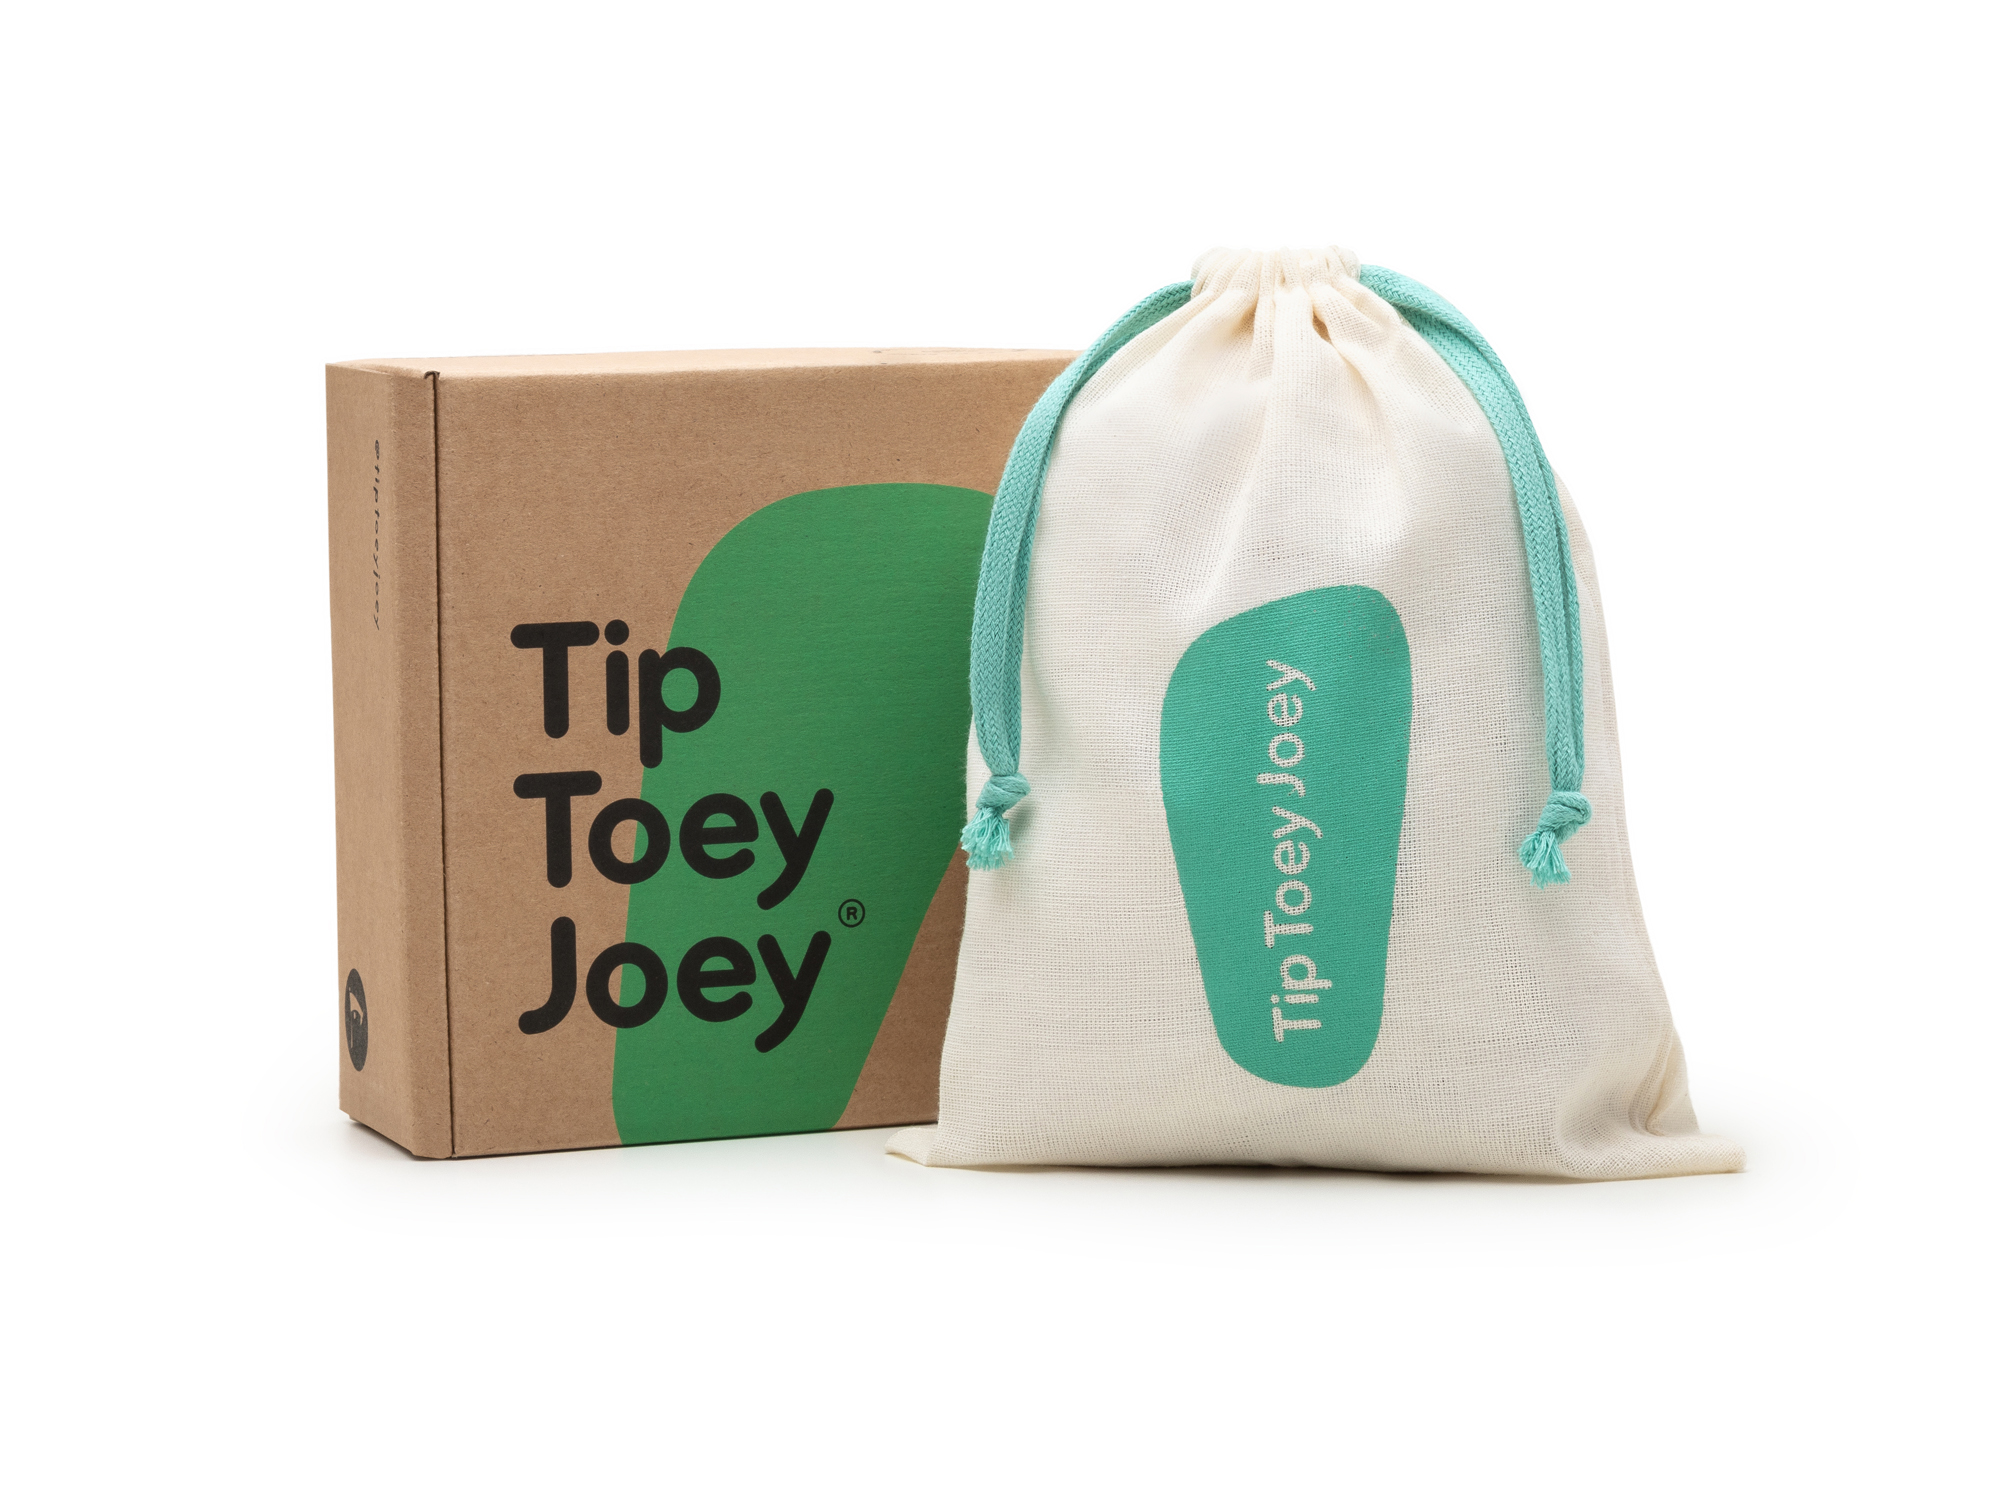 UP & GO Mary Janes for Girls Dainty | Tip Toey Joey - Australia - 6